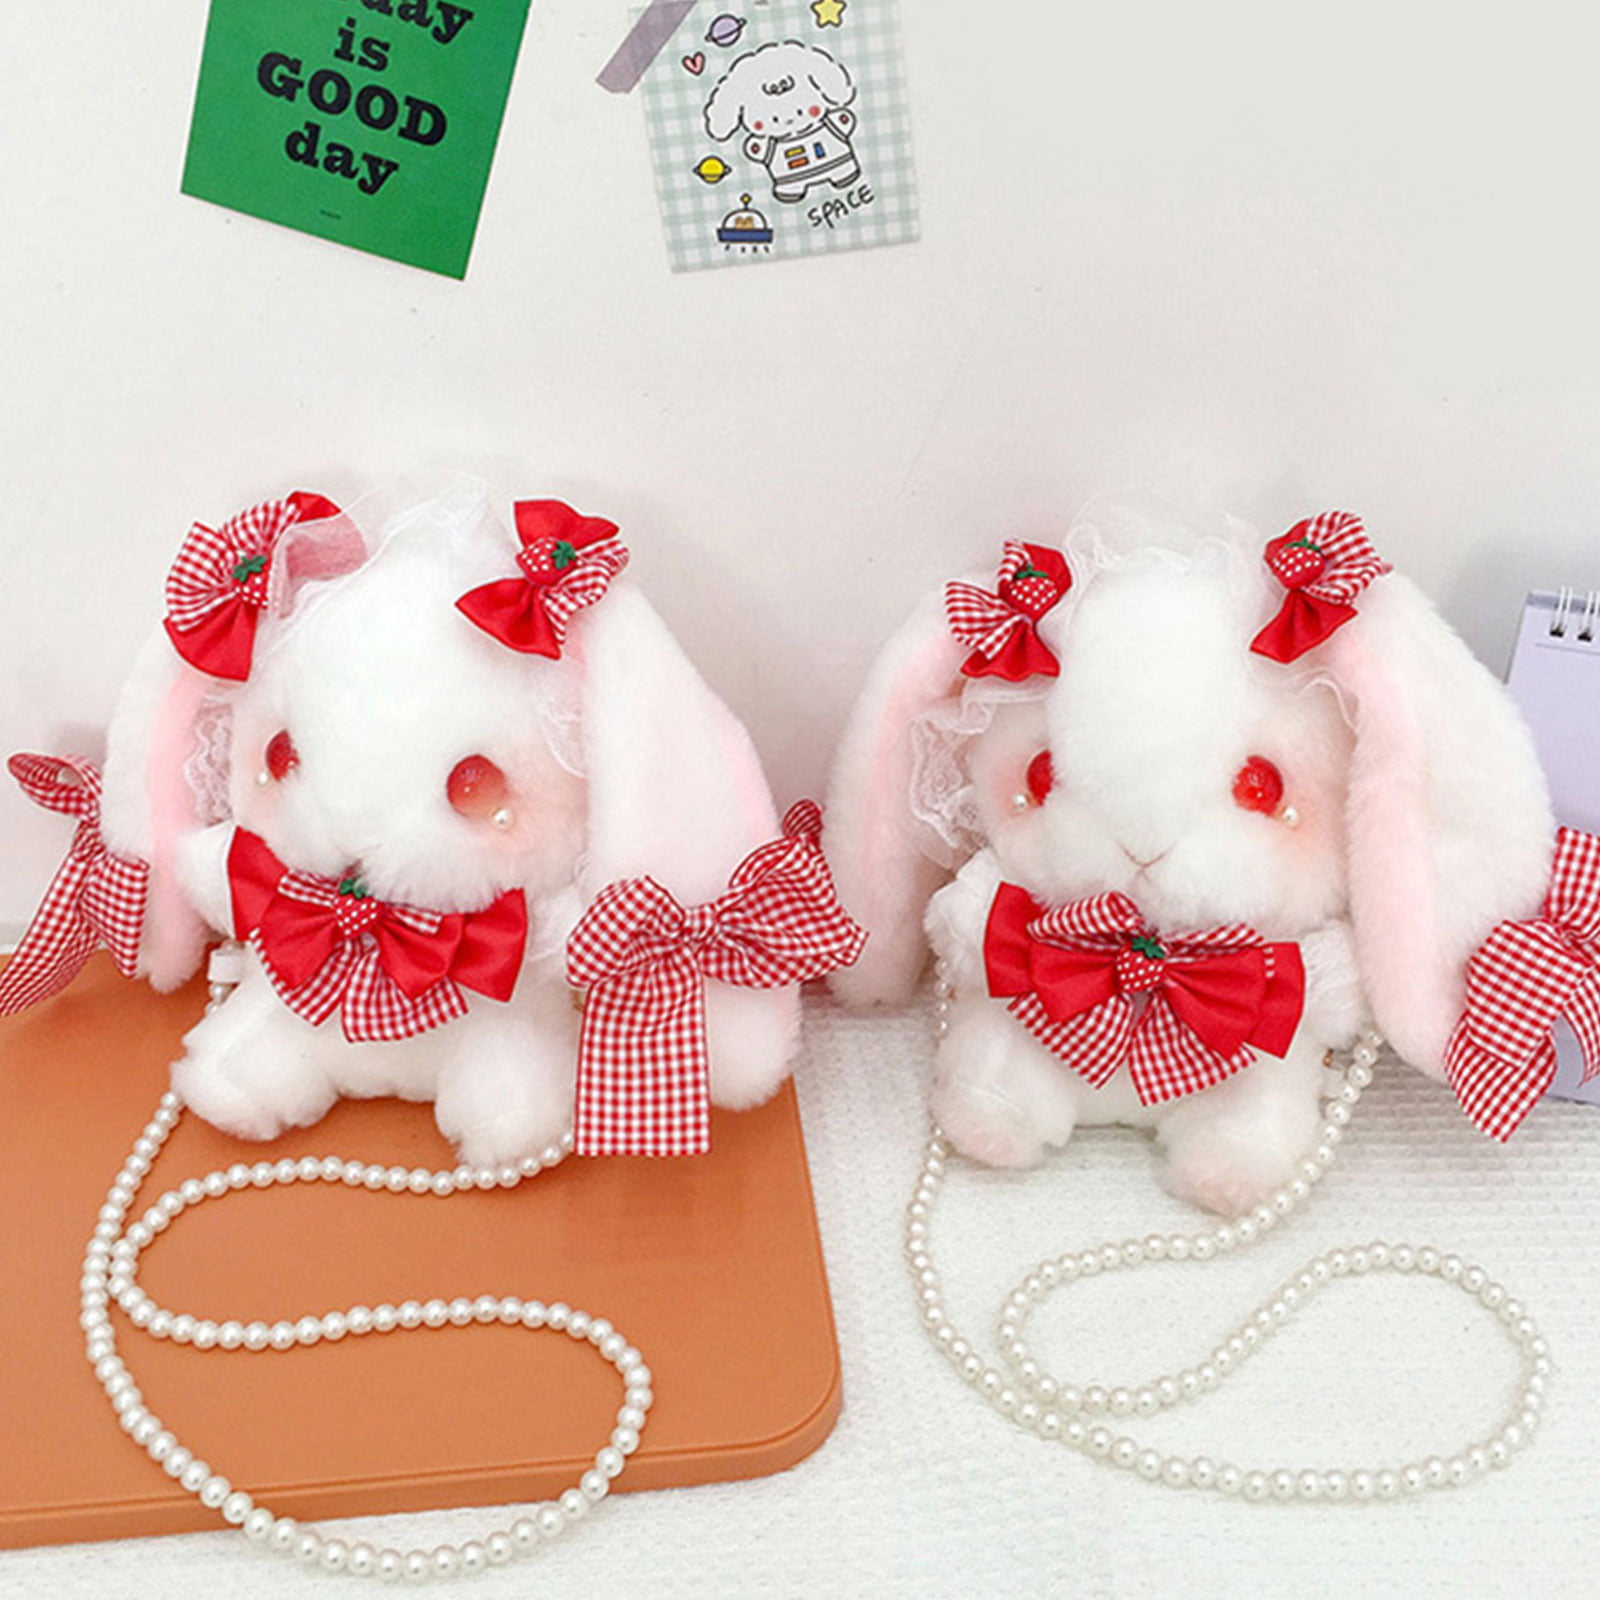 New Gothic Lolita Bag Cute Bunny Rabbit Doll Plush Japanese Bag